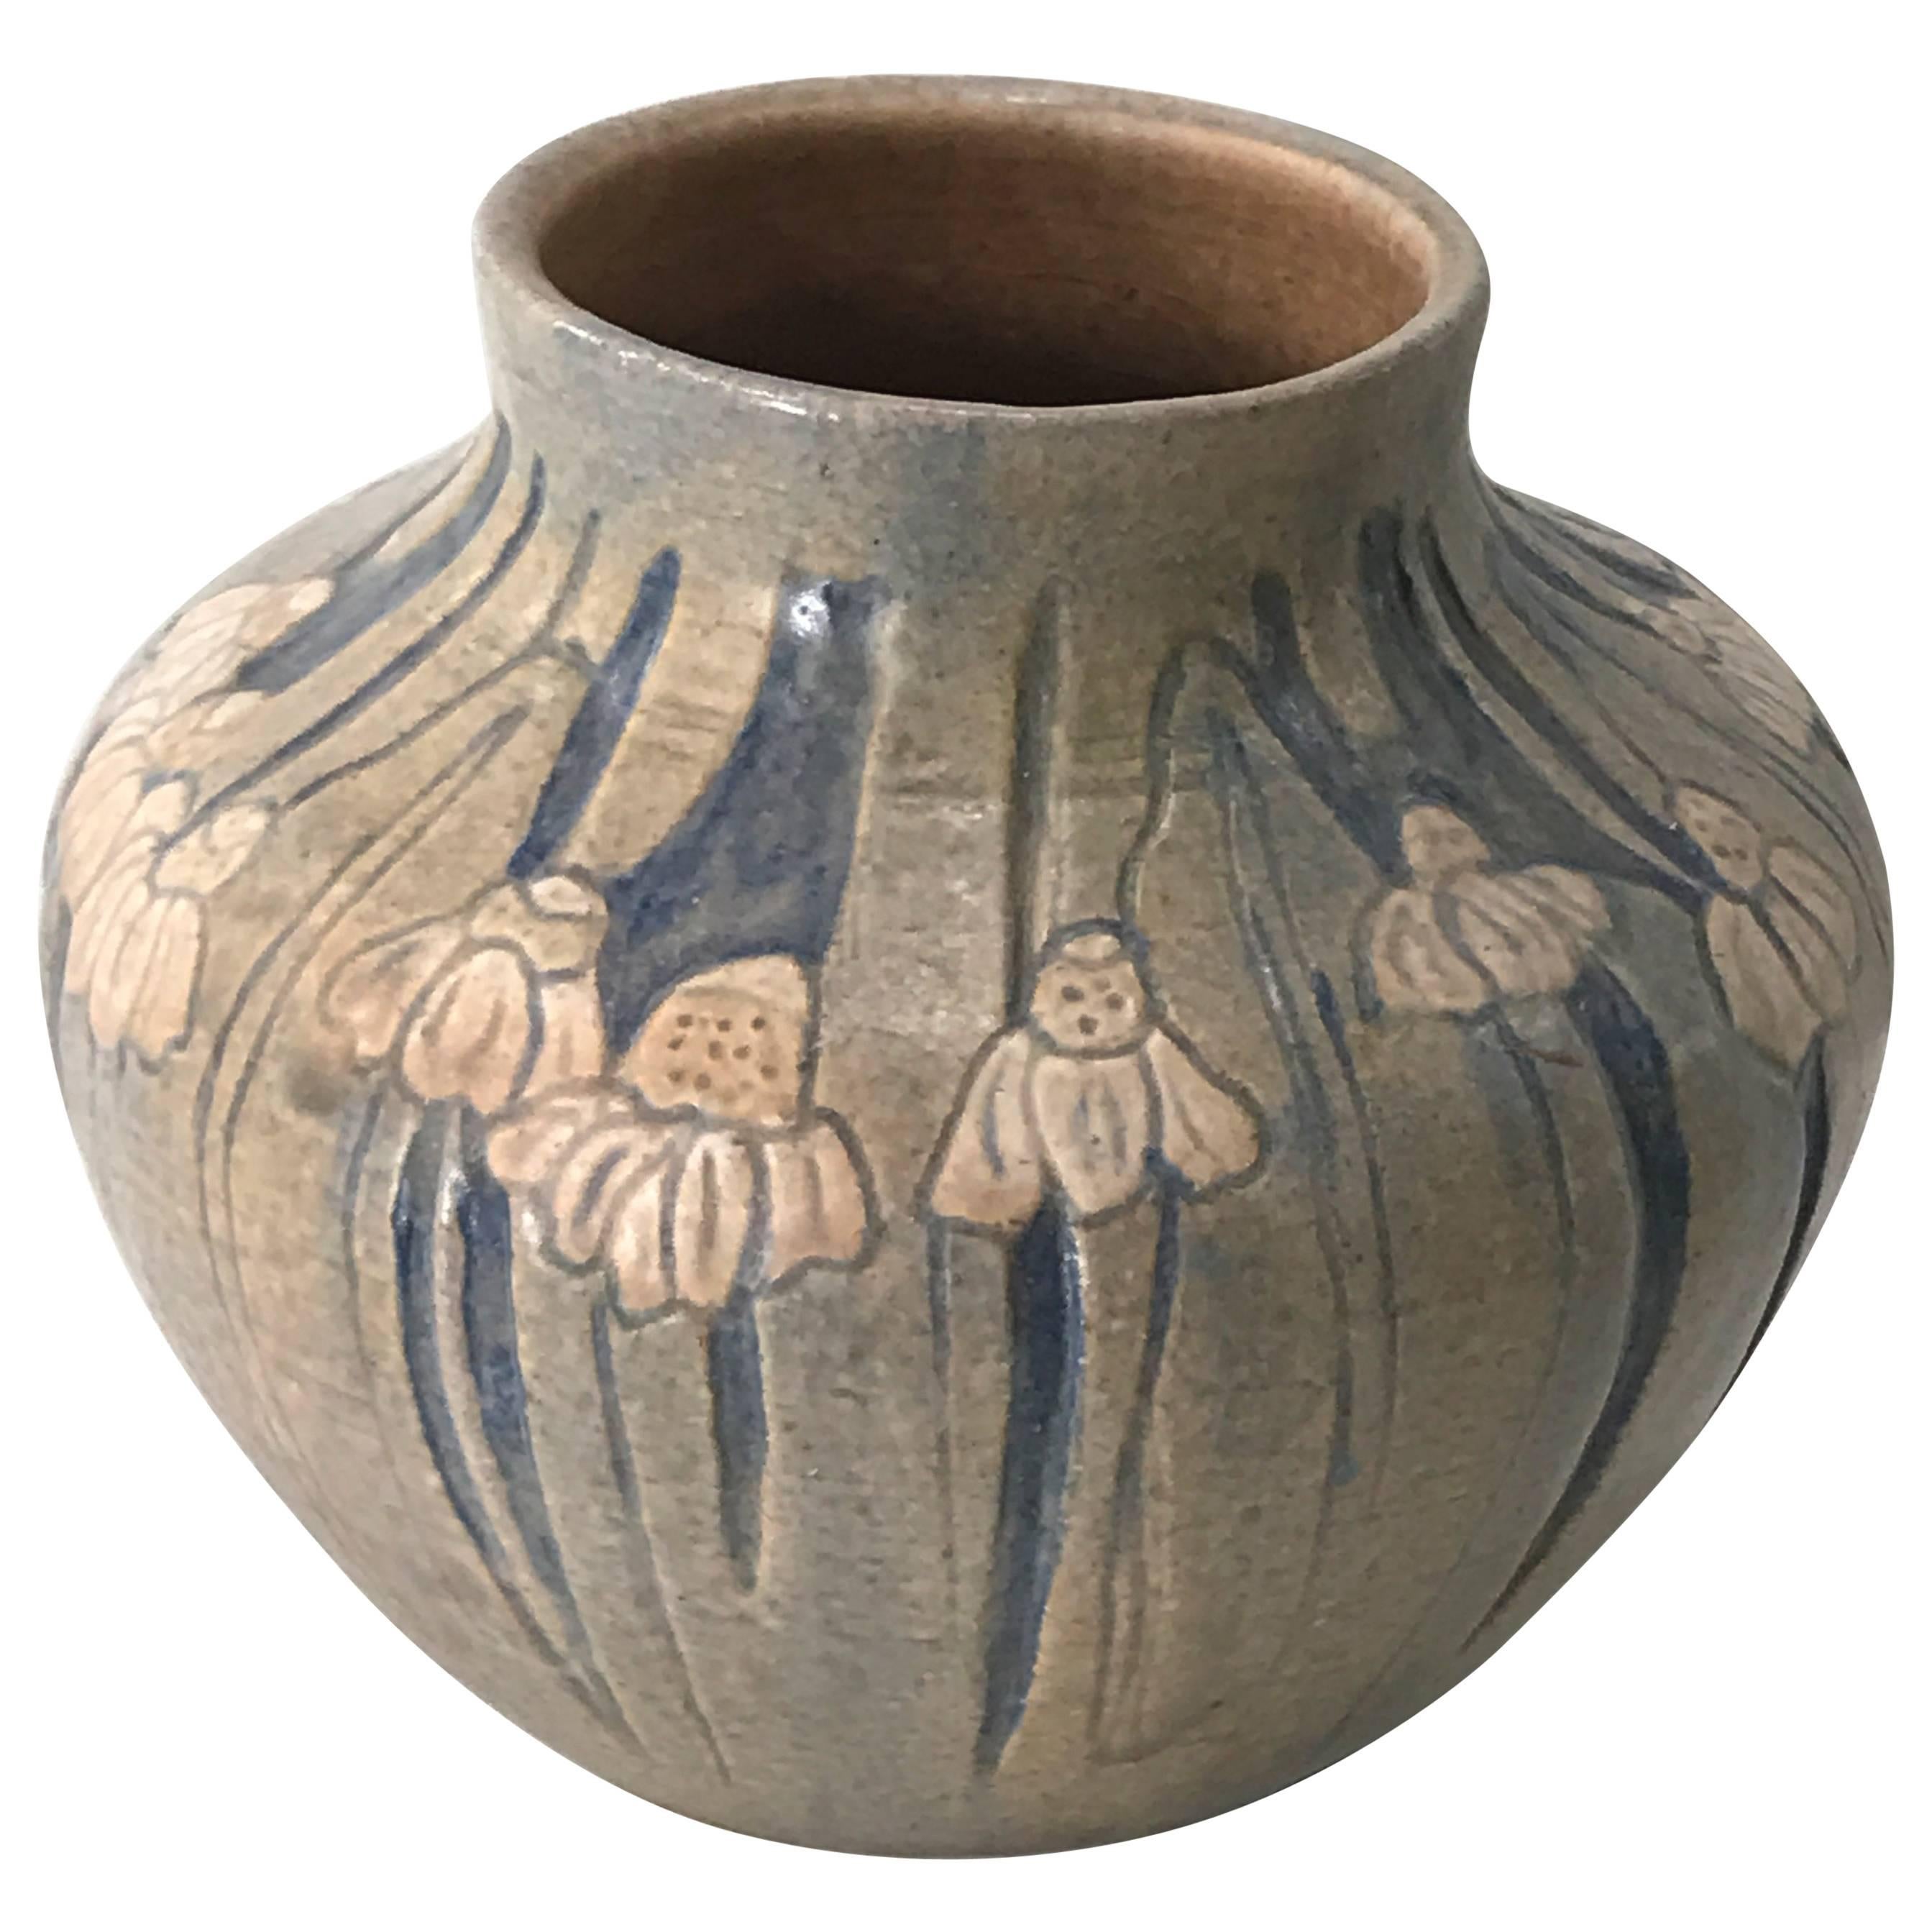 Exquisite Freiwald Pottery Vase